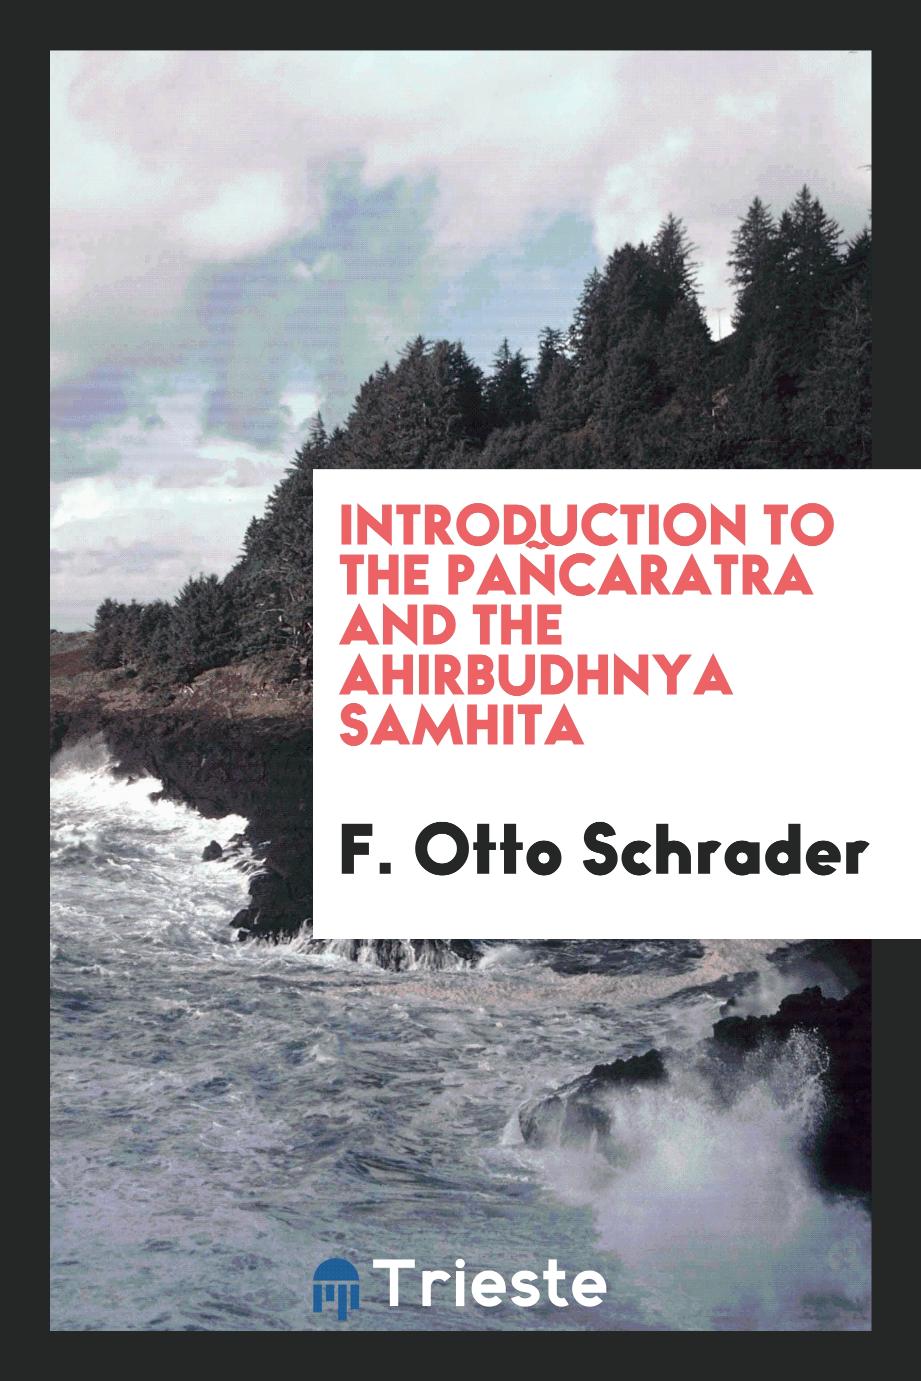 Introduction to the Pañcaratra and the Ahirbudhnya samhita